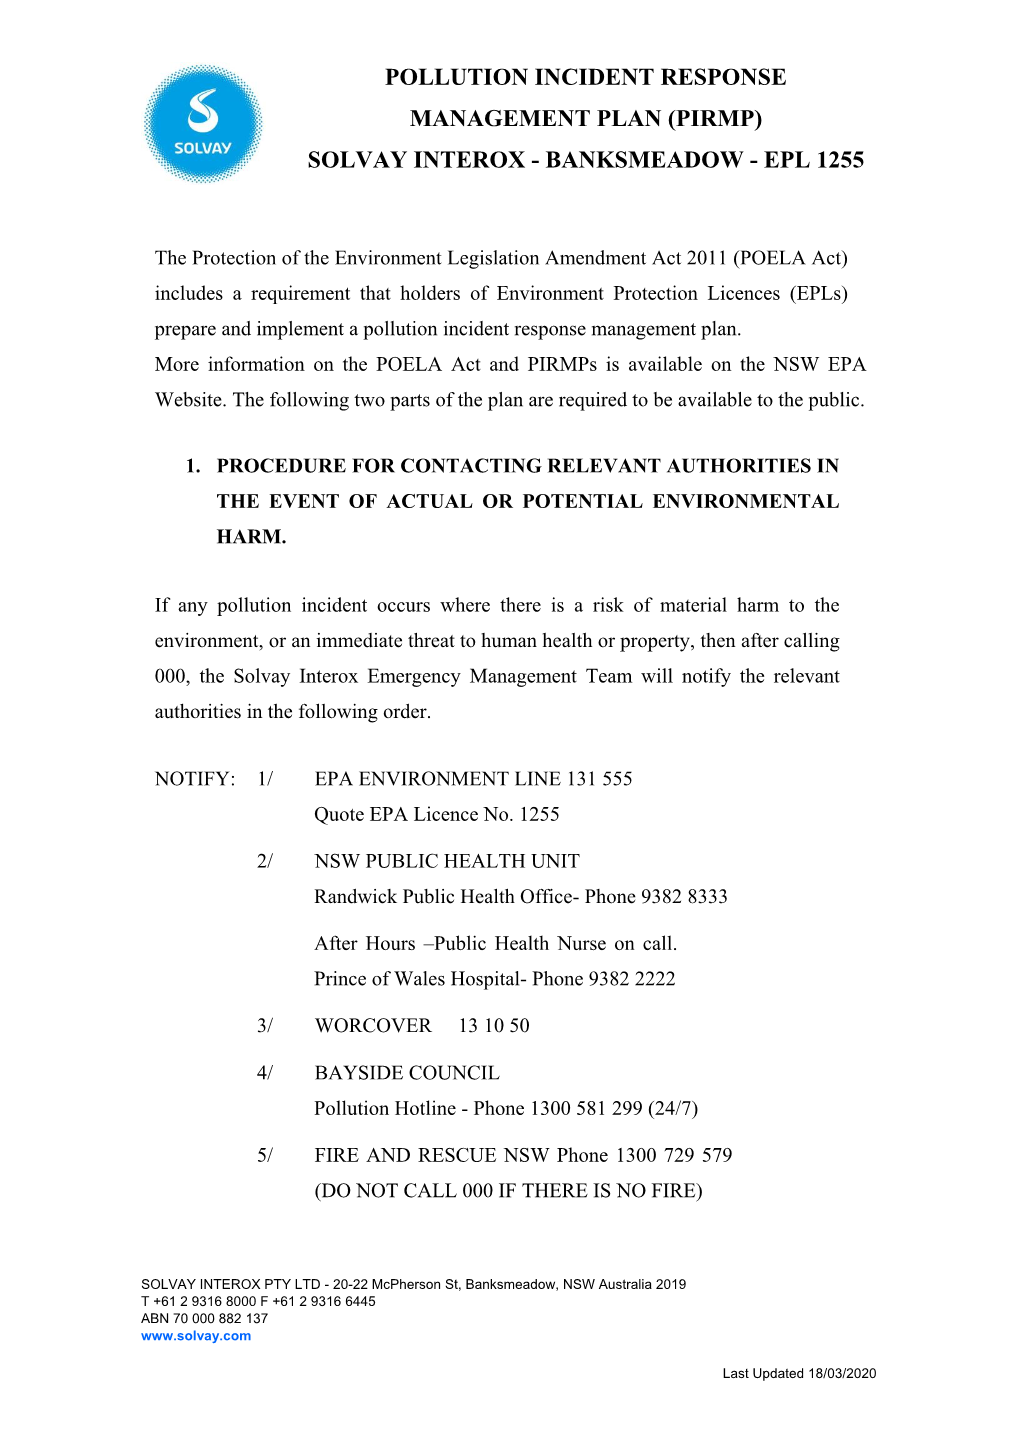 Pollution Incident Response Management Plan (Pirmp) Solvay Interox - Banksmeadow - Epl 1255